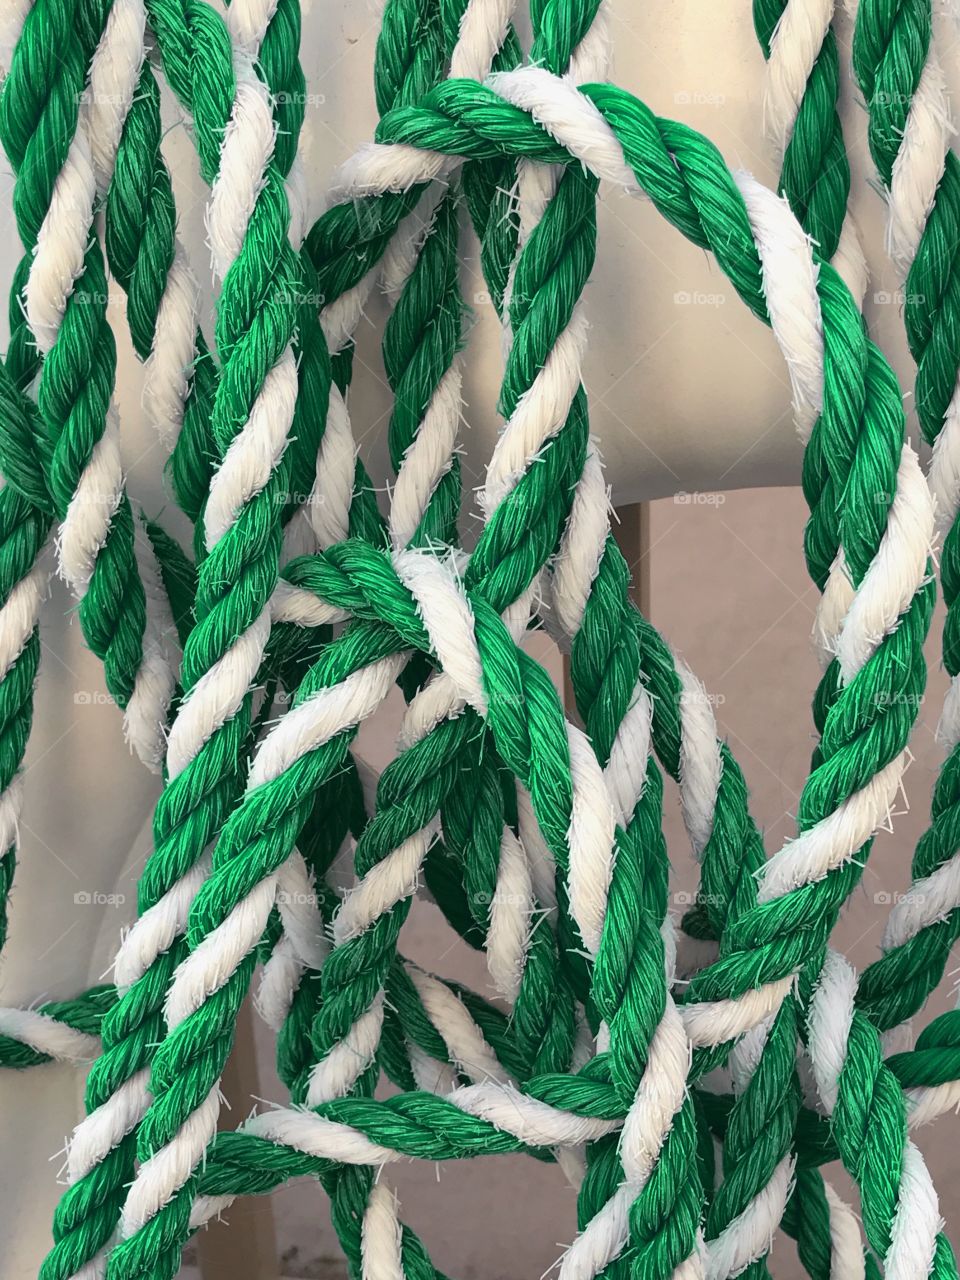 Green tangled rope